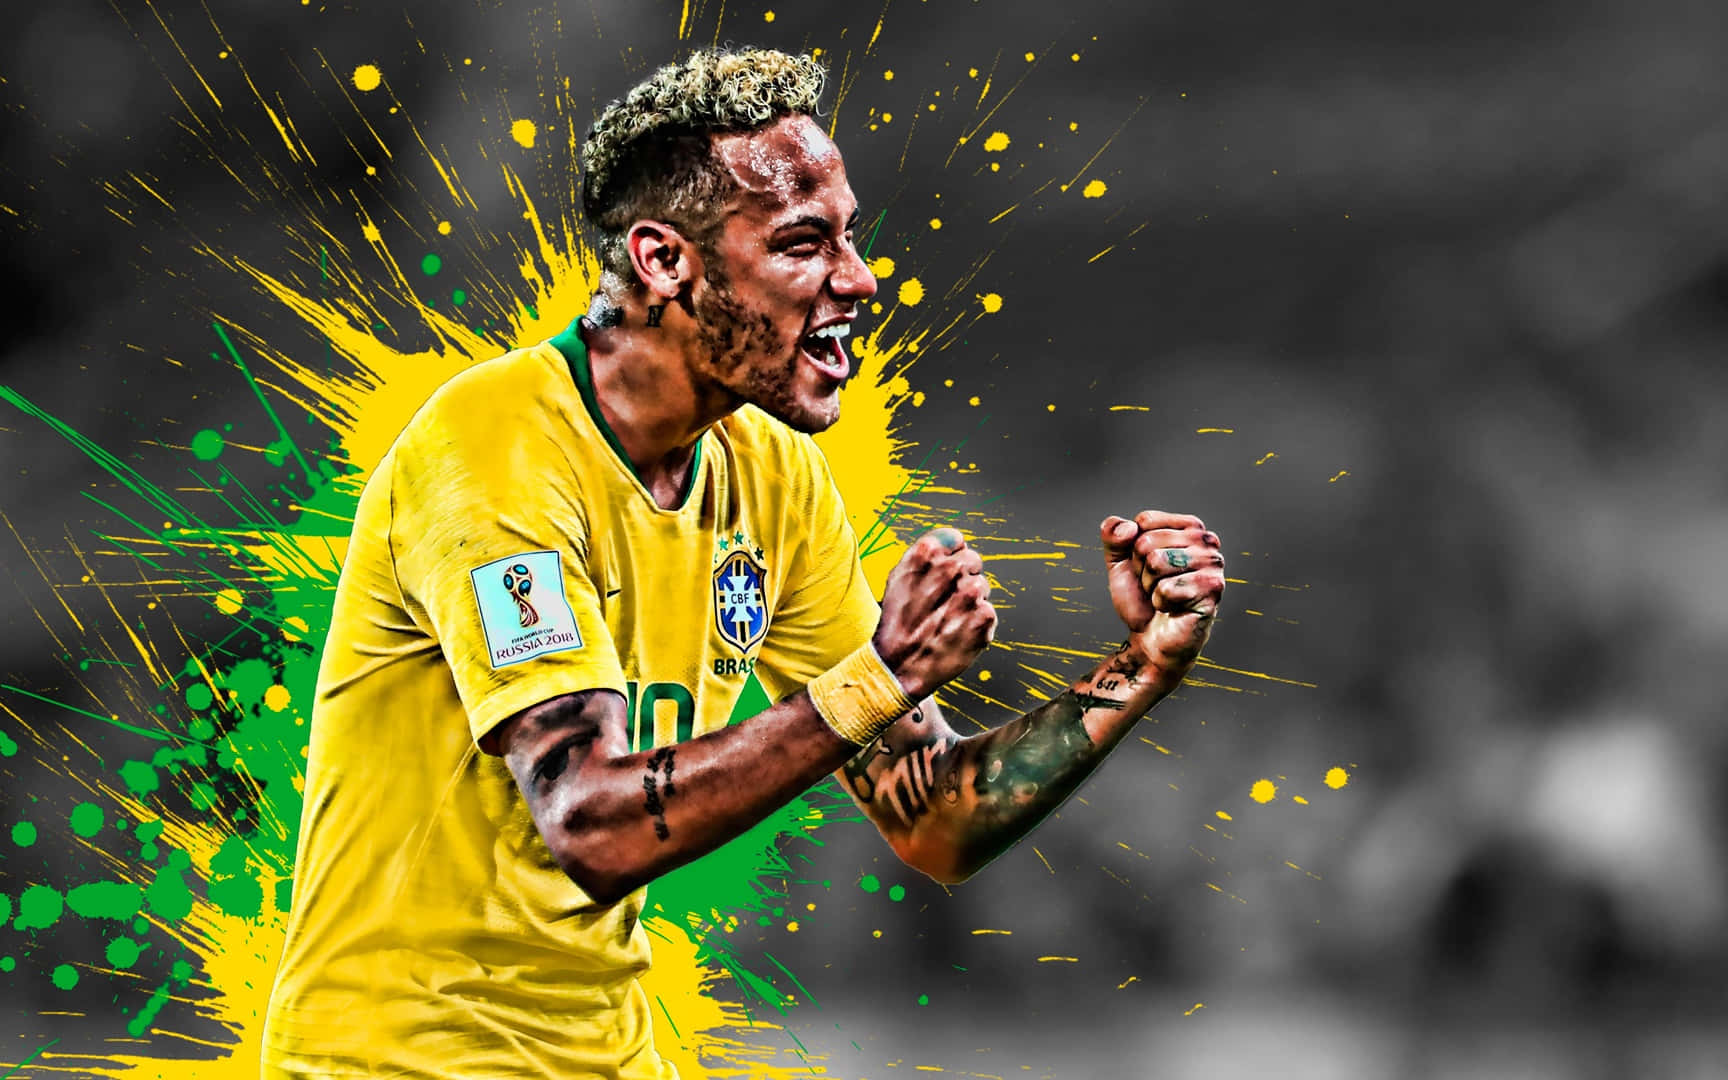 Neymar Ultra Hd 1728 X 1080 Wallpaper